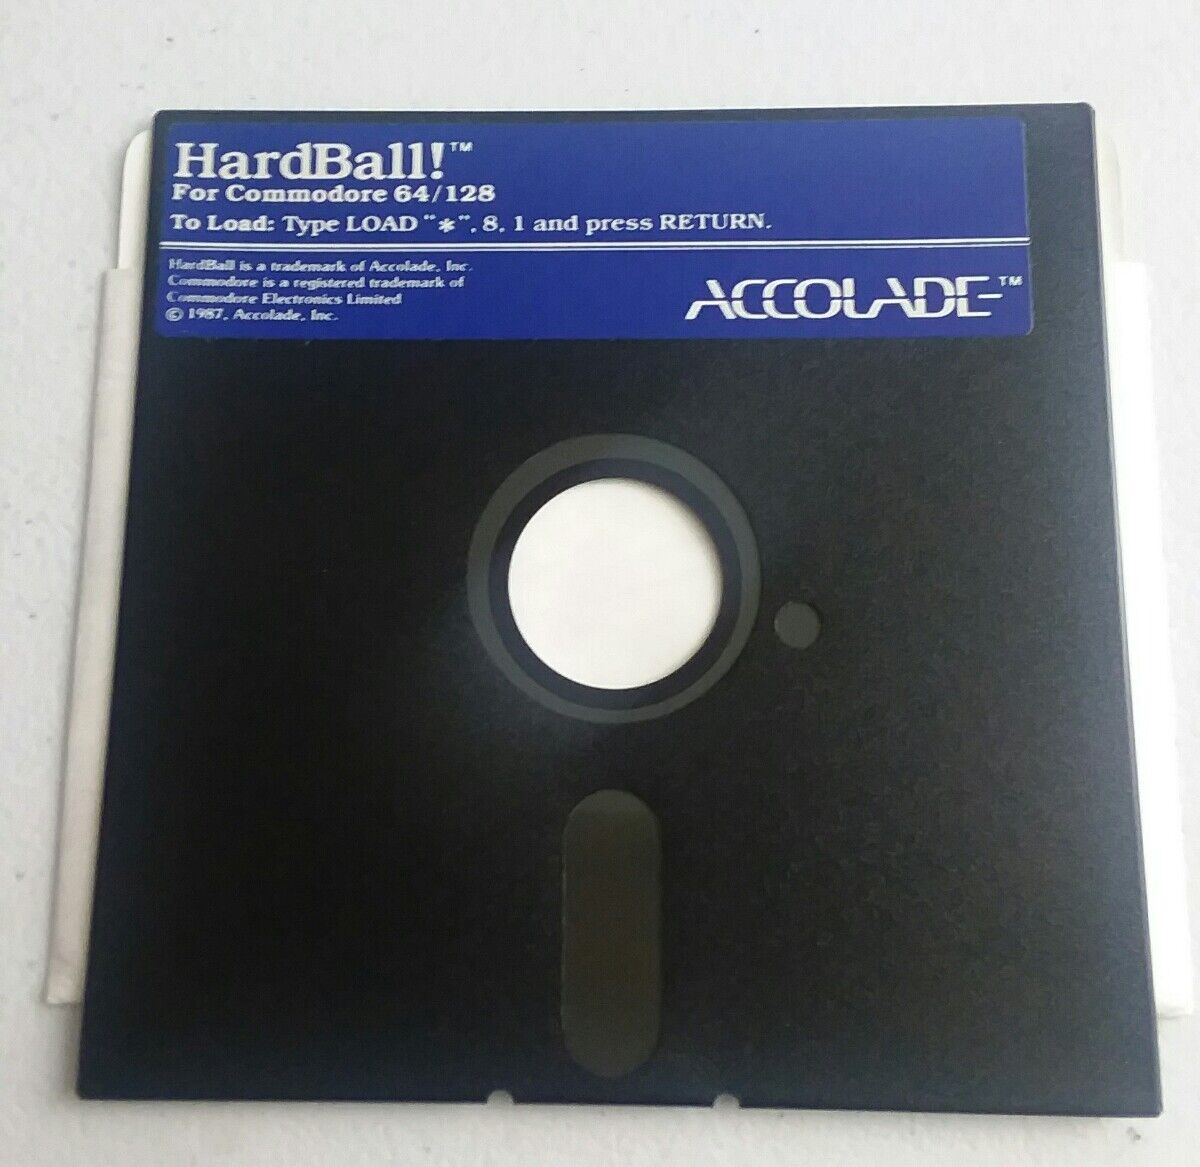 HardBall Accolade Commodore 64